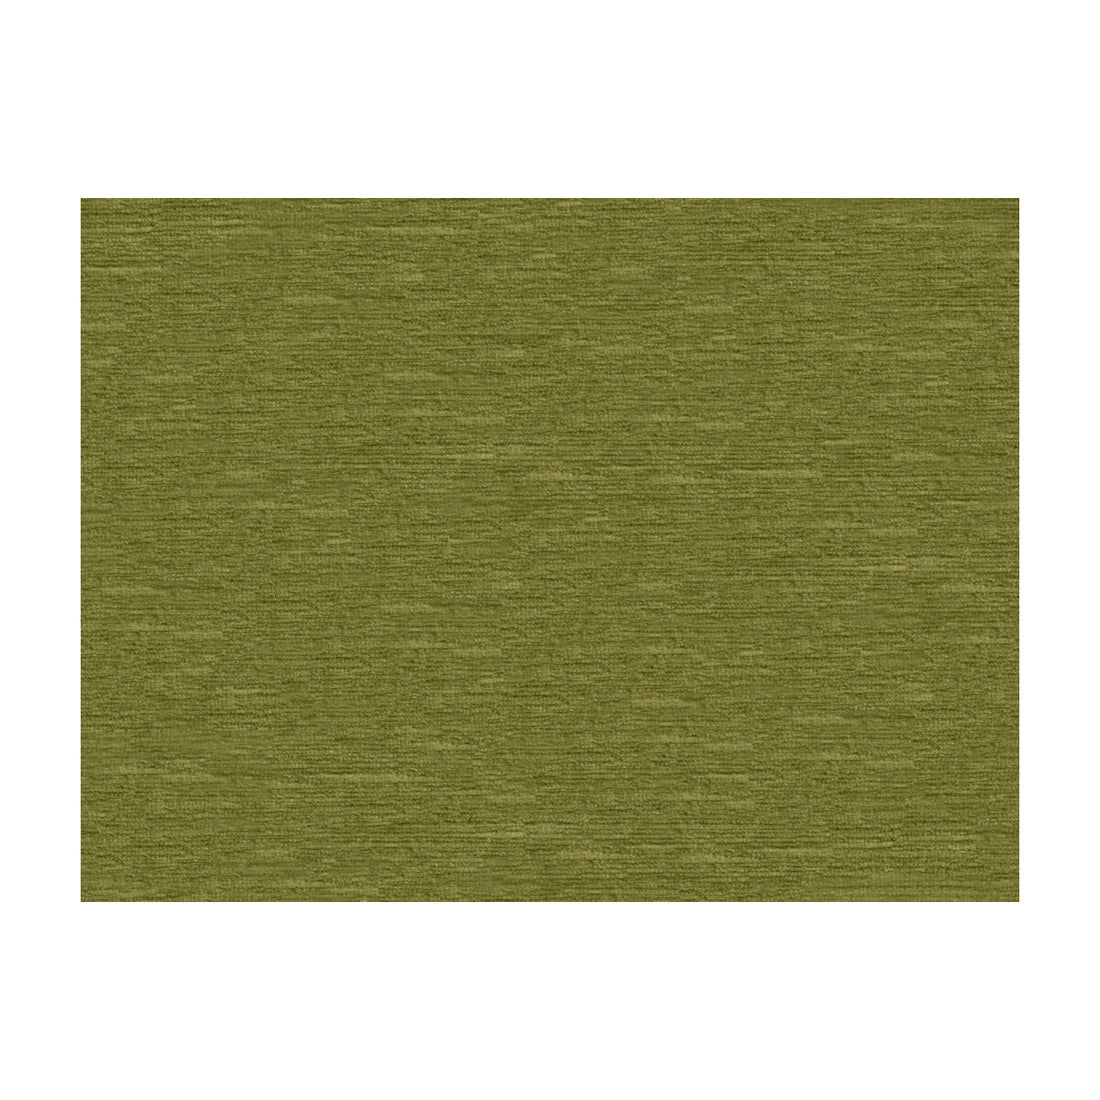 Thanon Linen Velvet fabric in avocado color - pattern BR-89776.434.0 - by Brunschwig &amp; Fils